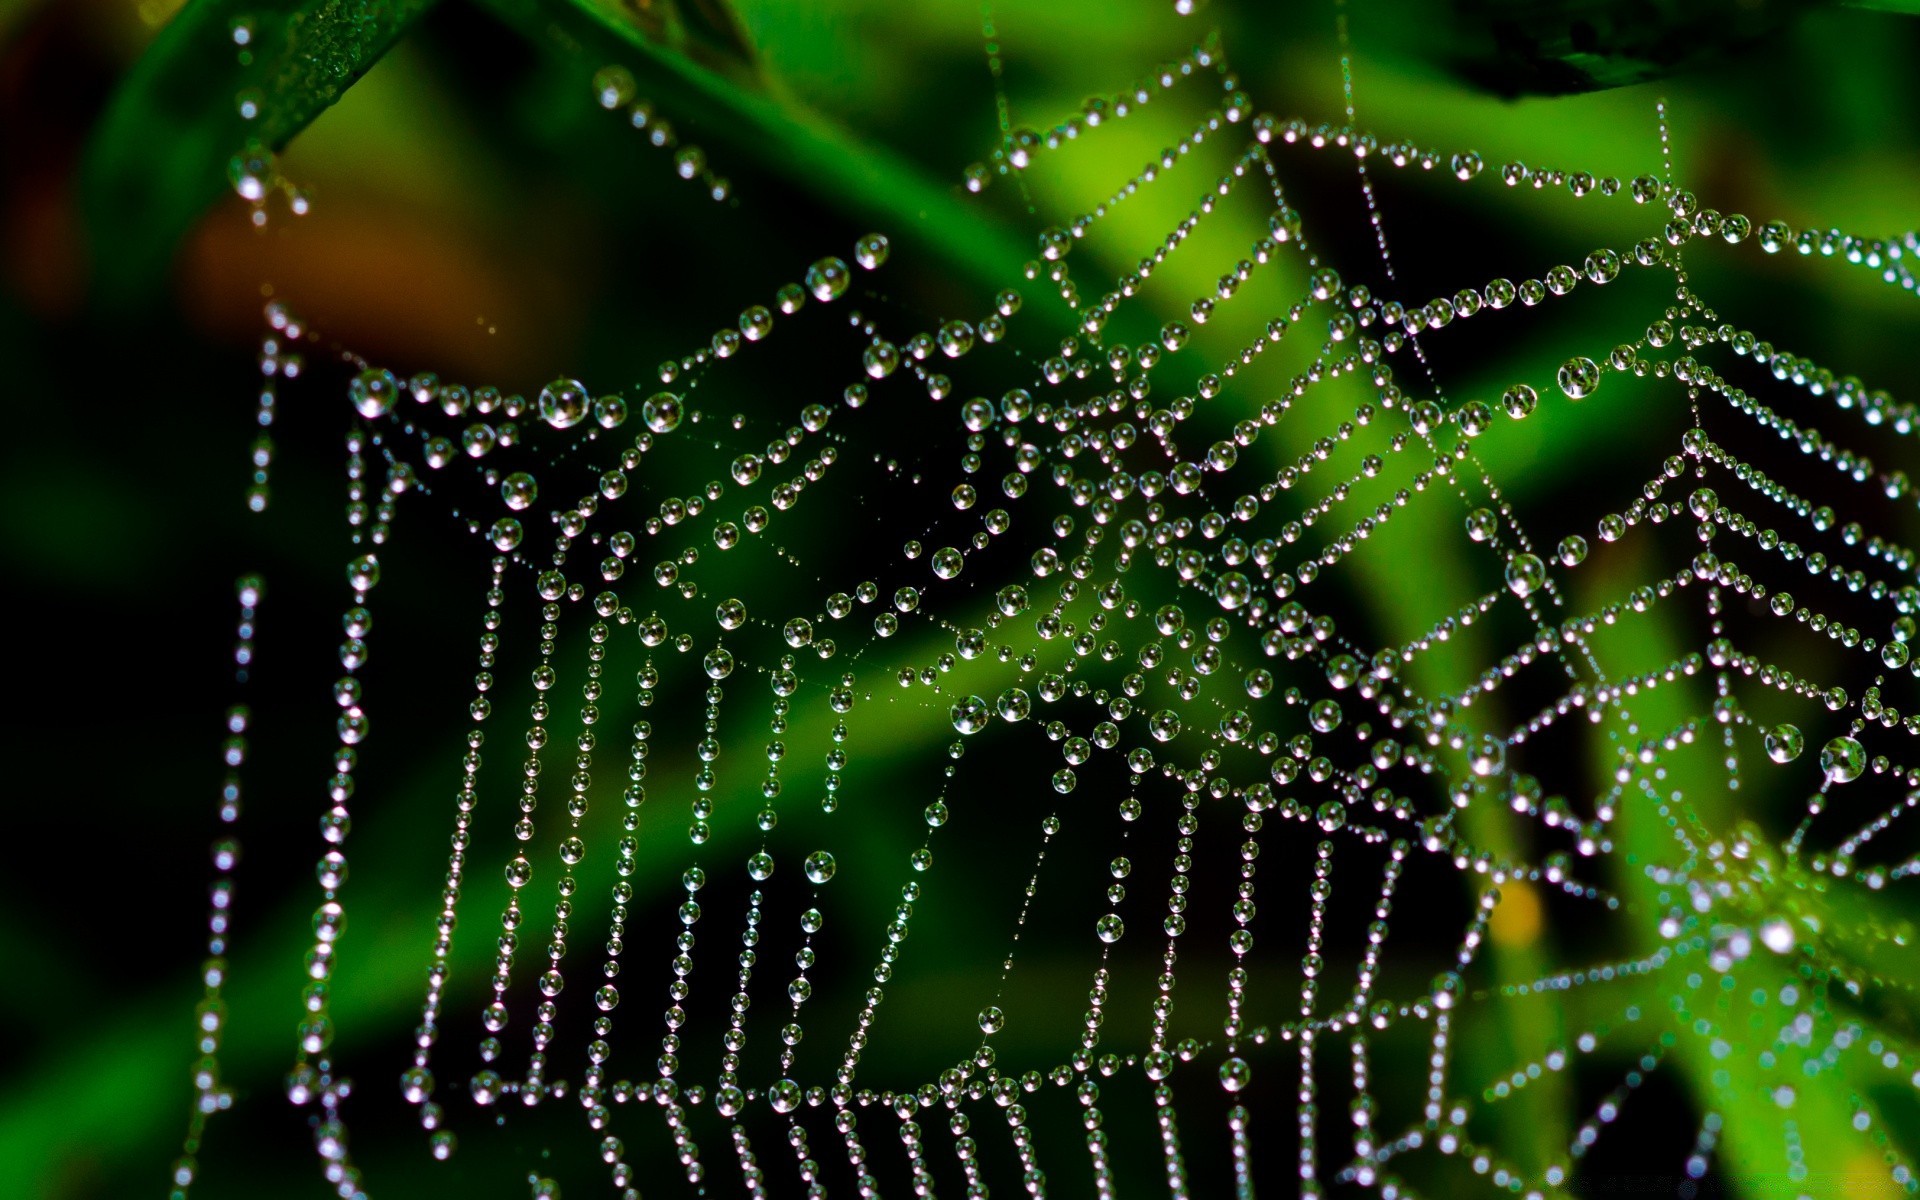 macro spider spiderweb trap cobweb dew web arachnid nature intricacy connection rain network insect drop pattern creepy abstract thread